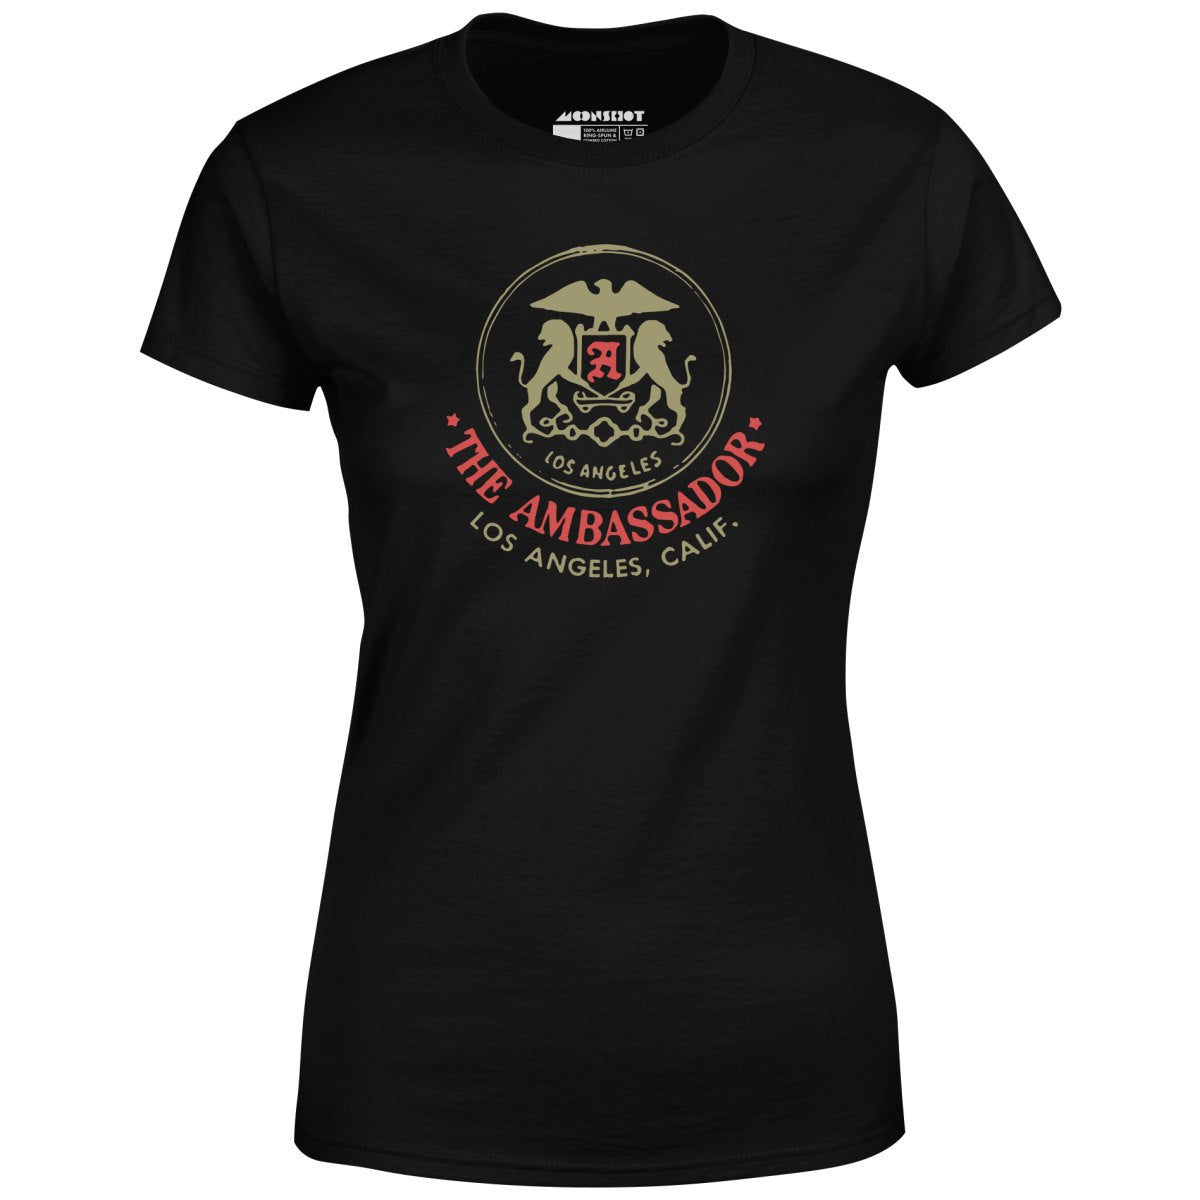 Ambassador Hotel - Los Angeles, CA - Vintage Hotel - Women's T-Shirt